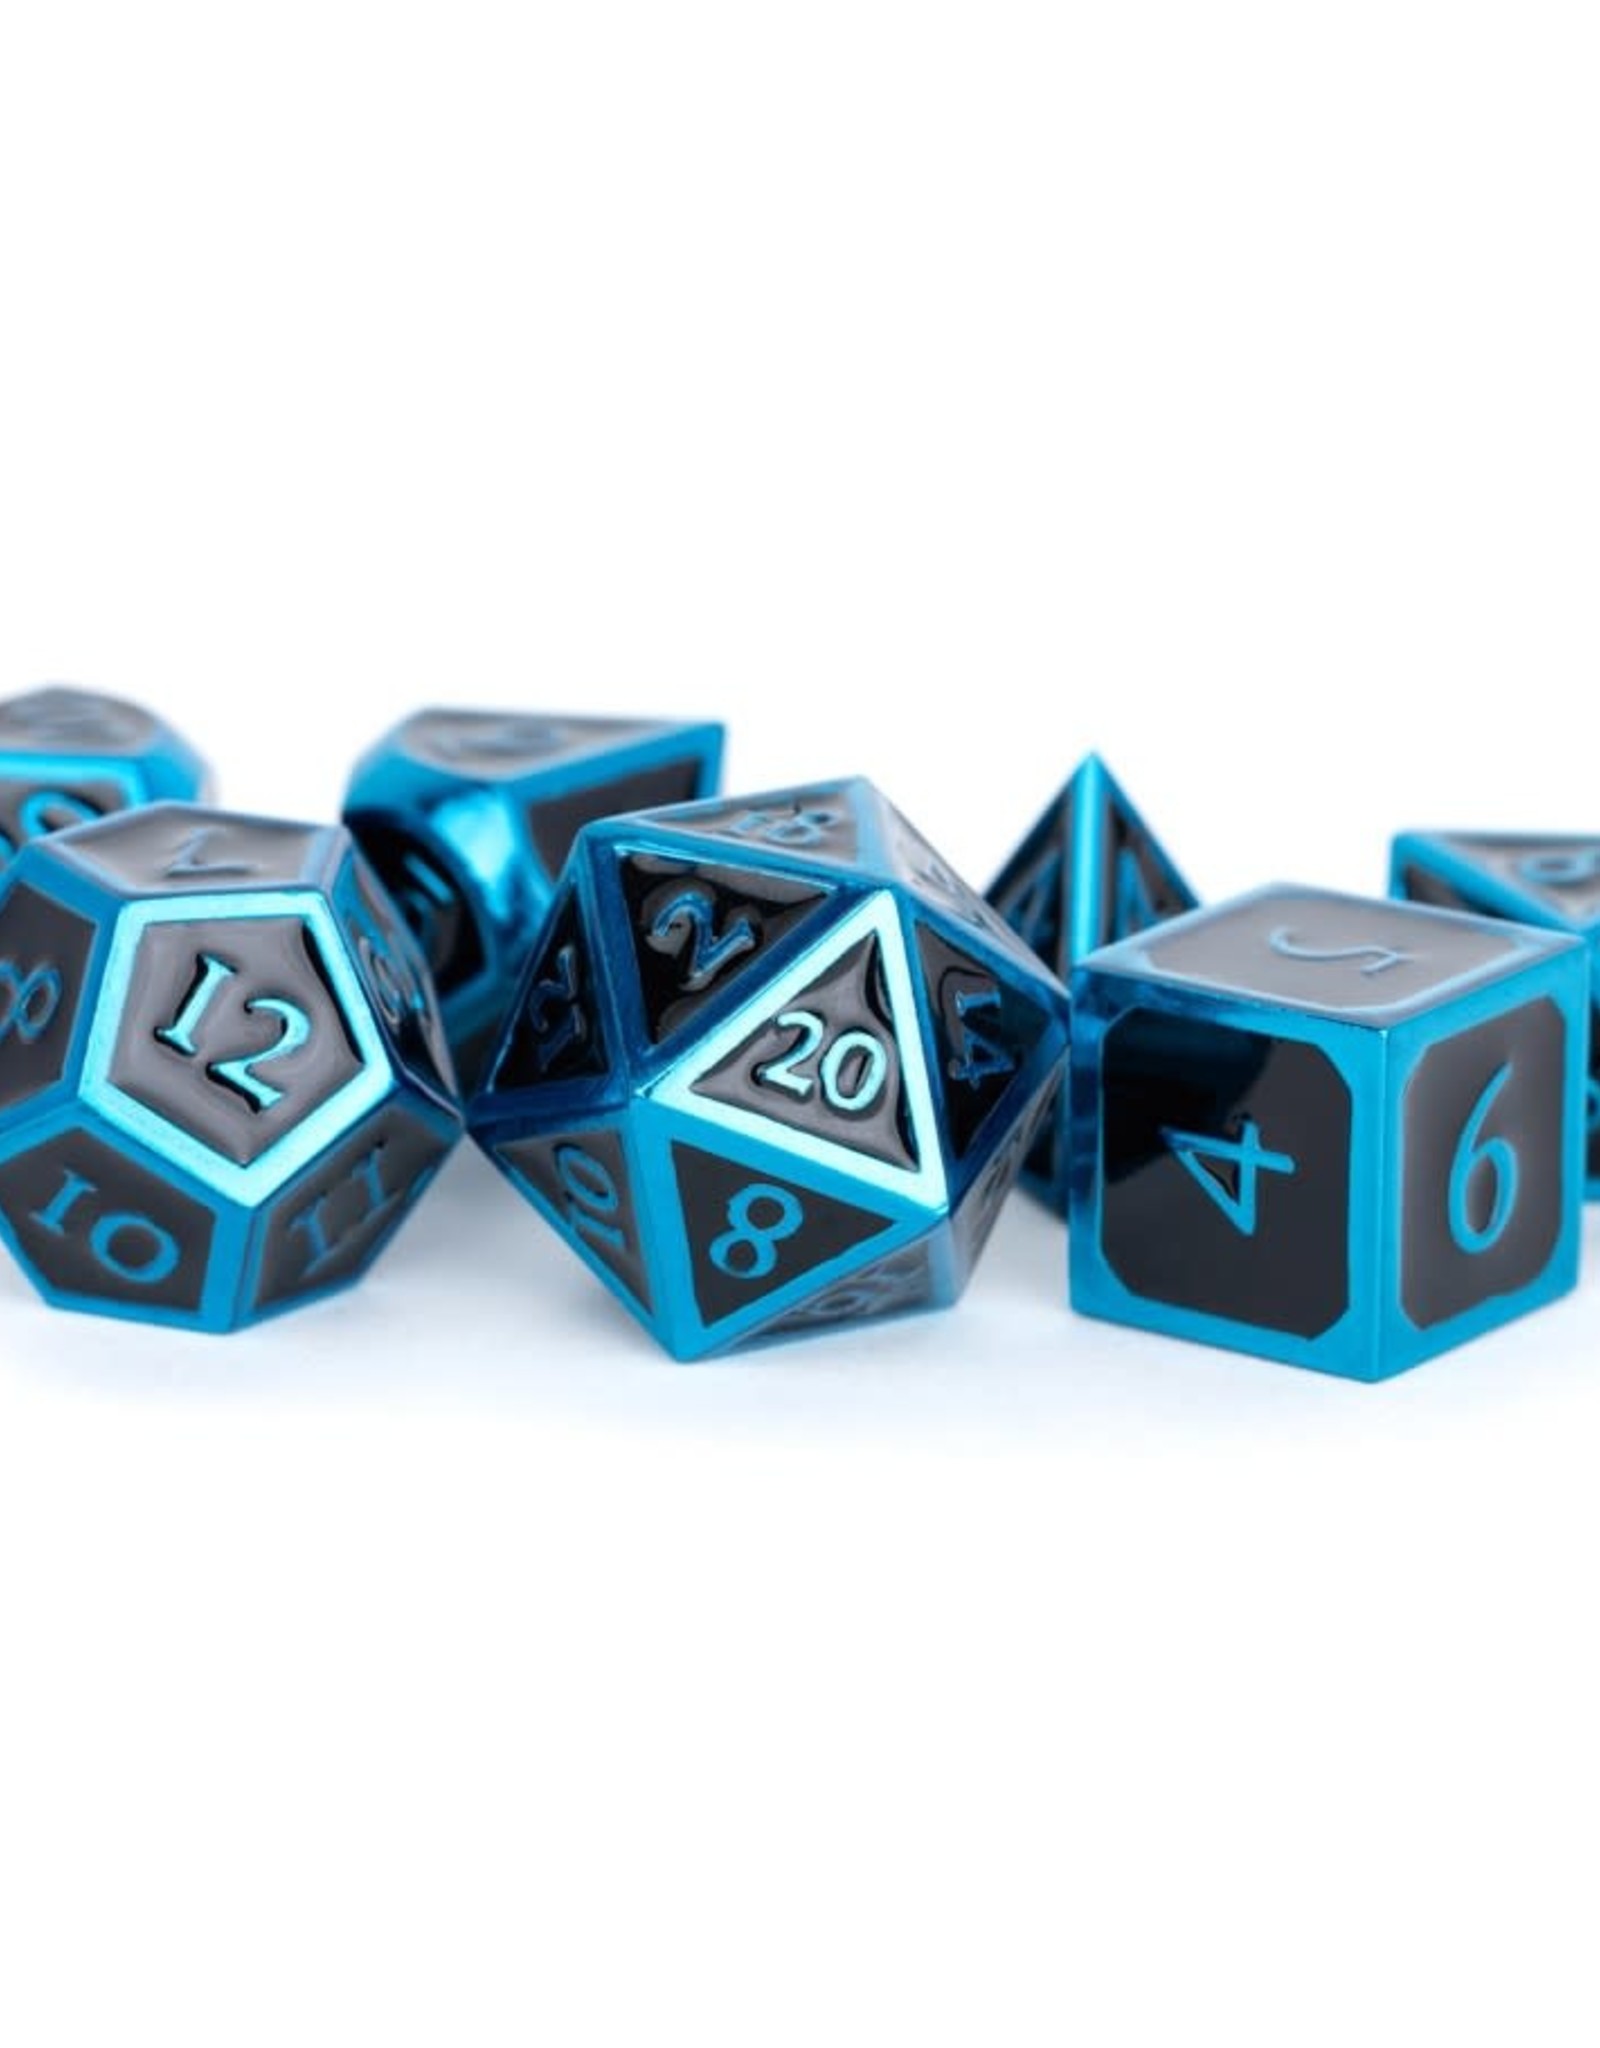 Metallic Dice Games Metal Polyhedral Dice (7) Blue with Black Enamel